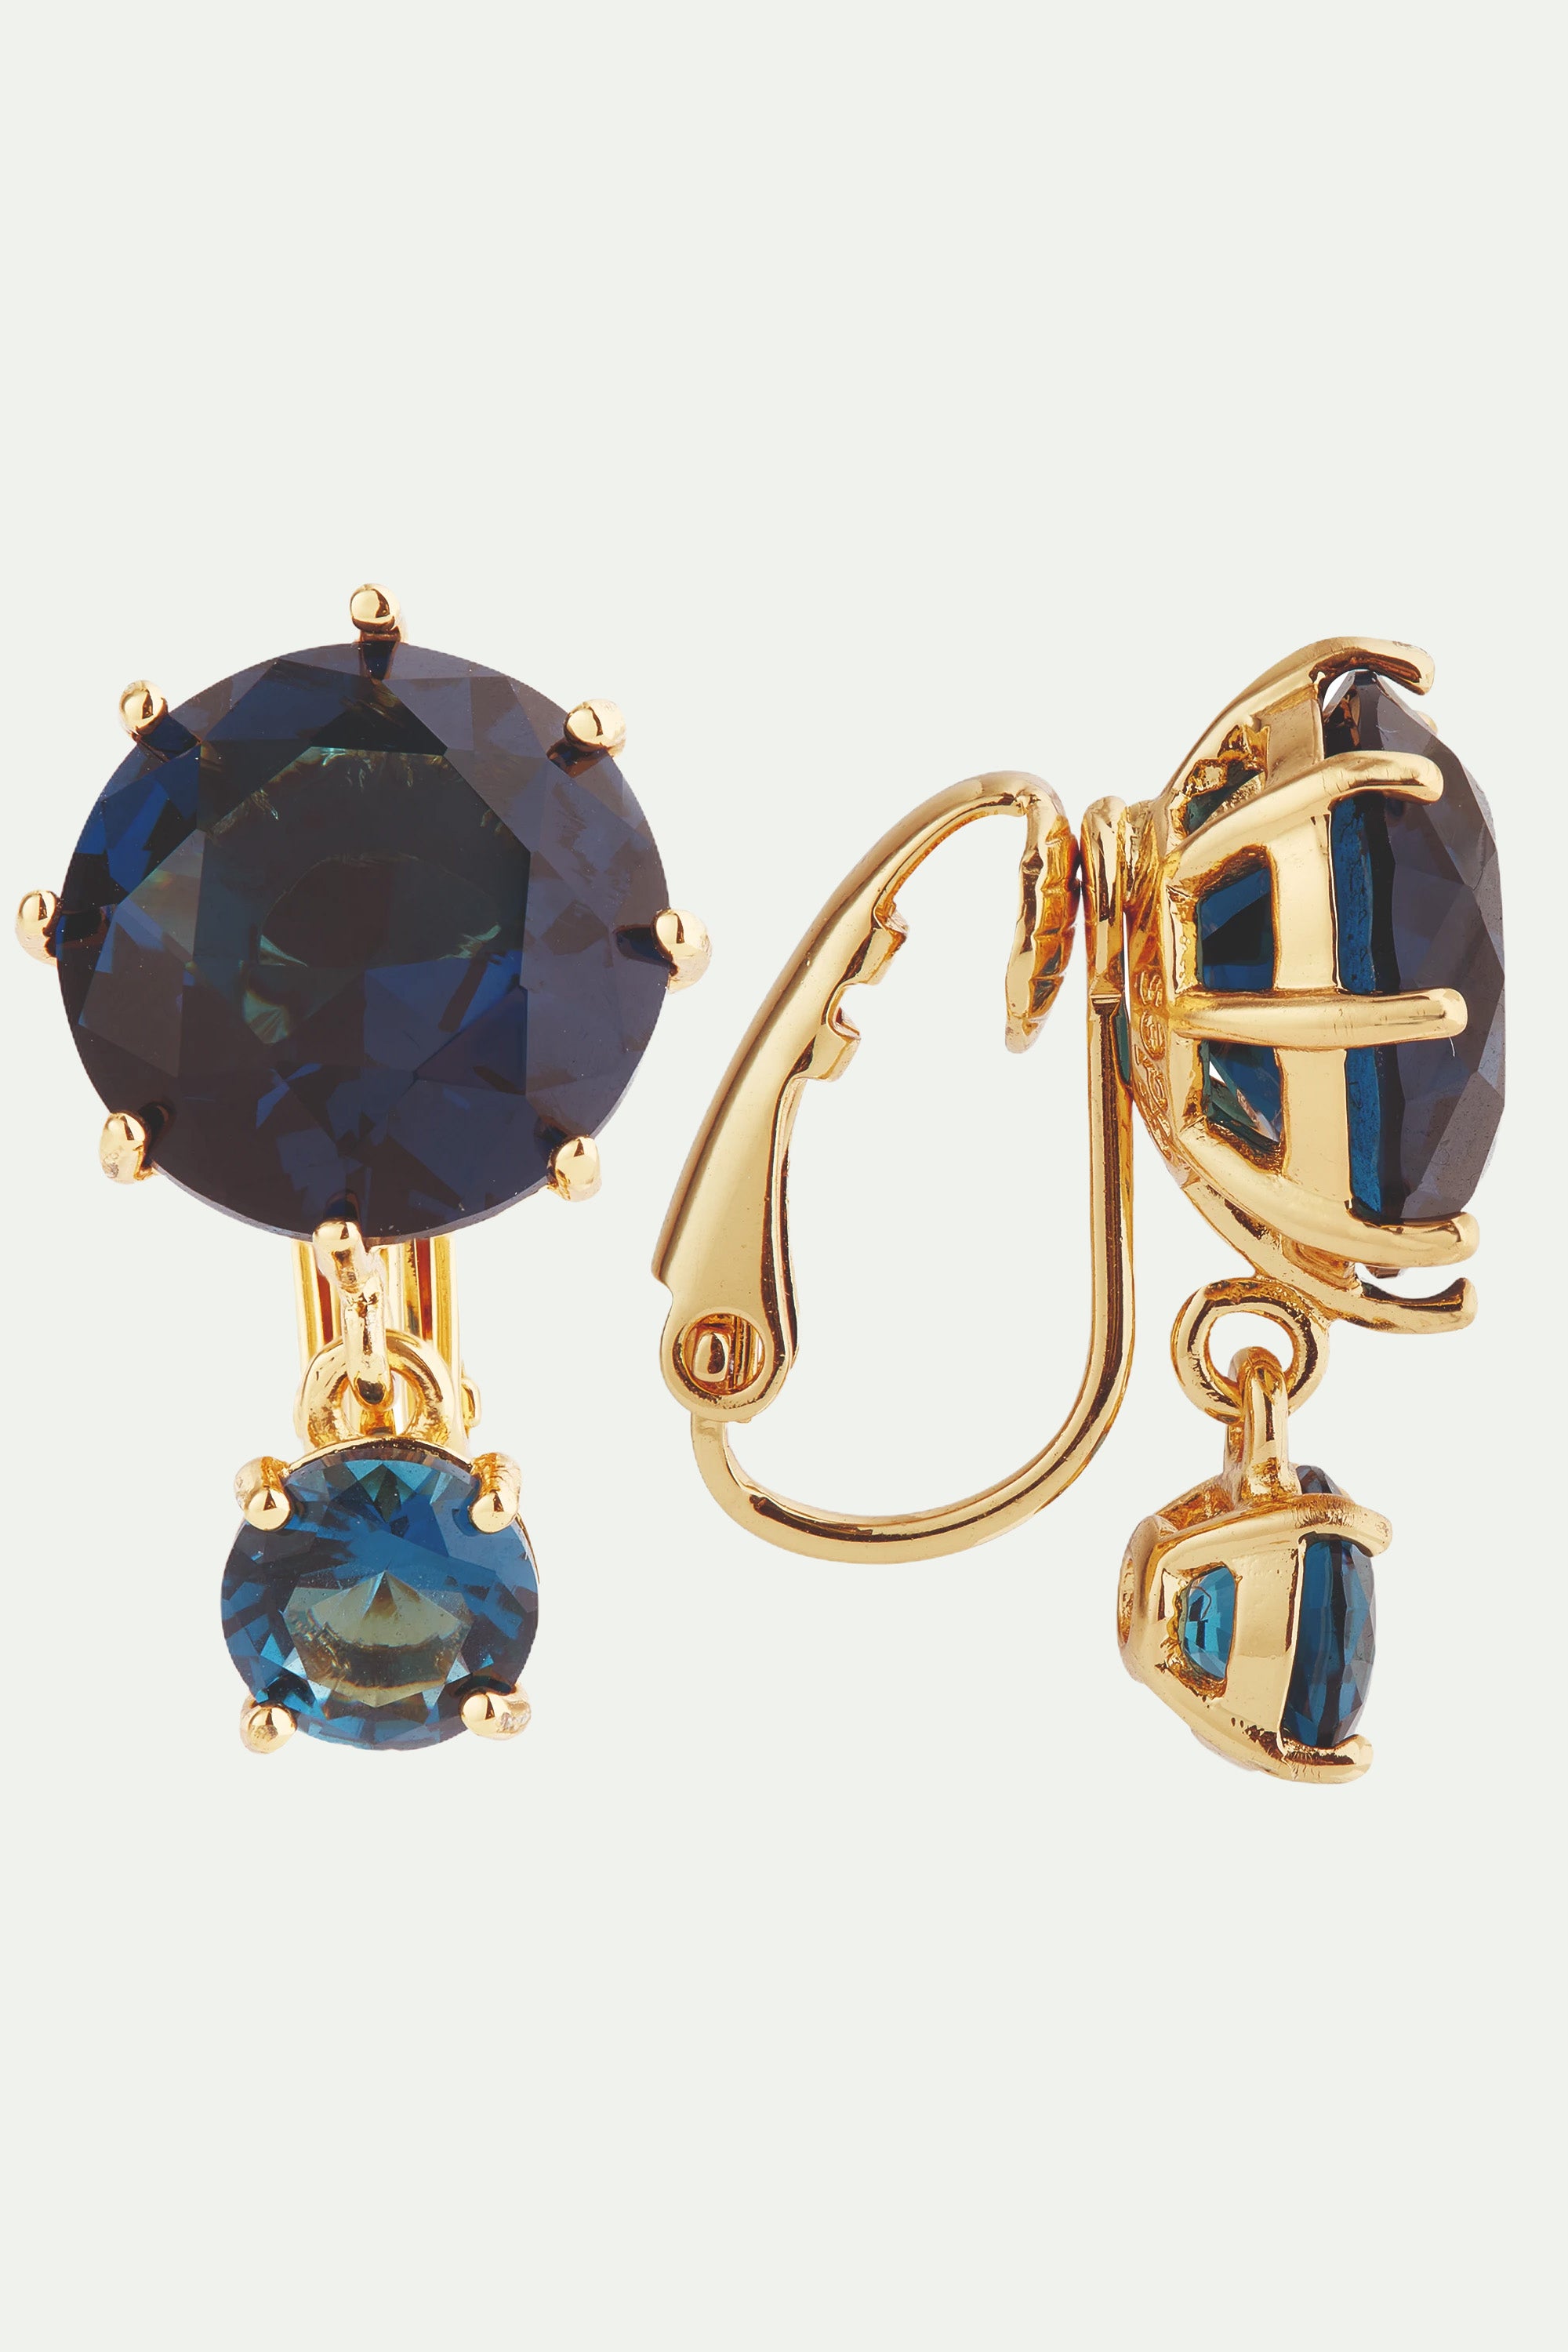 OCean blue diamantine 2 round stone post earrings